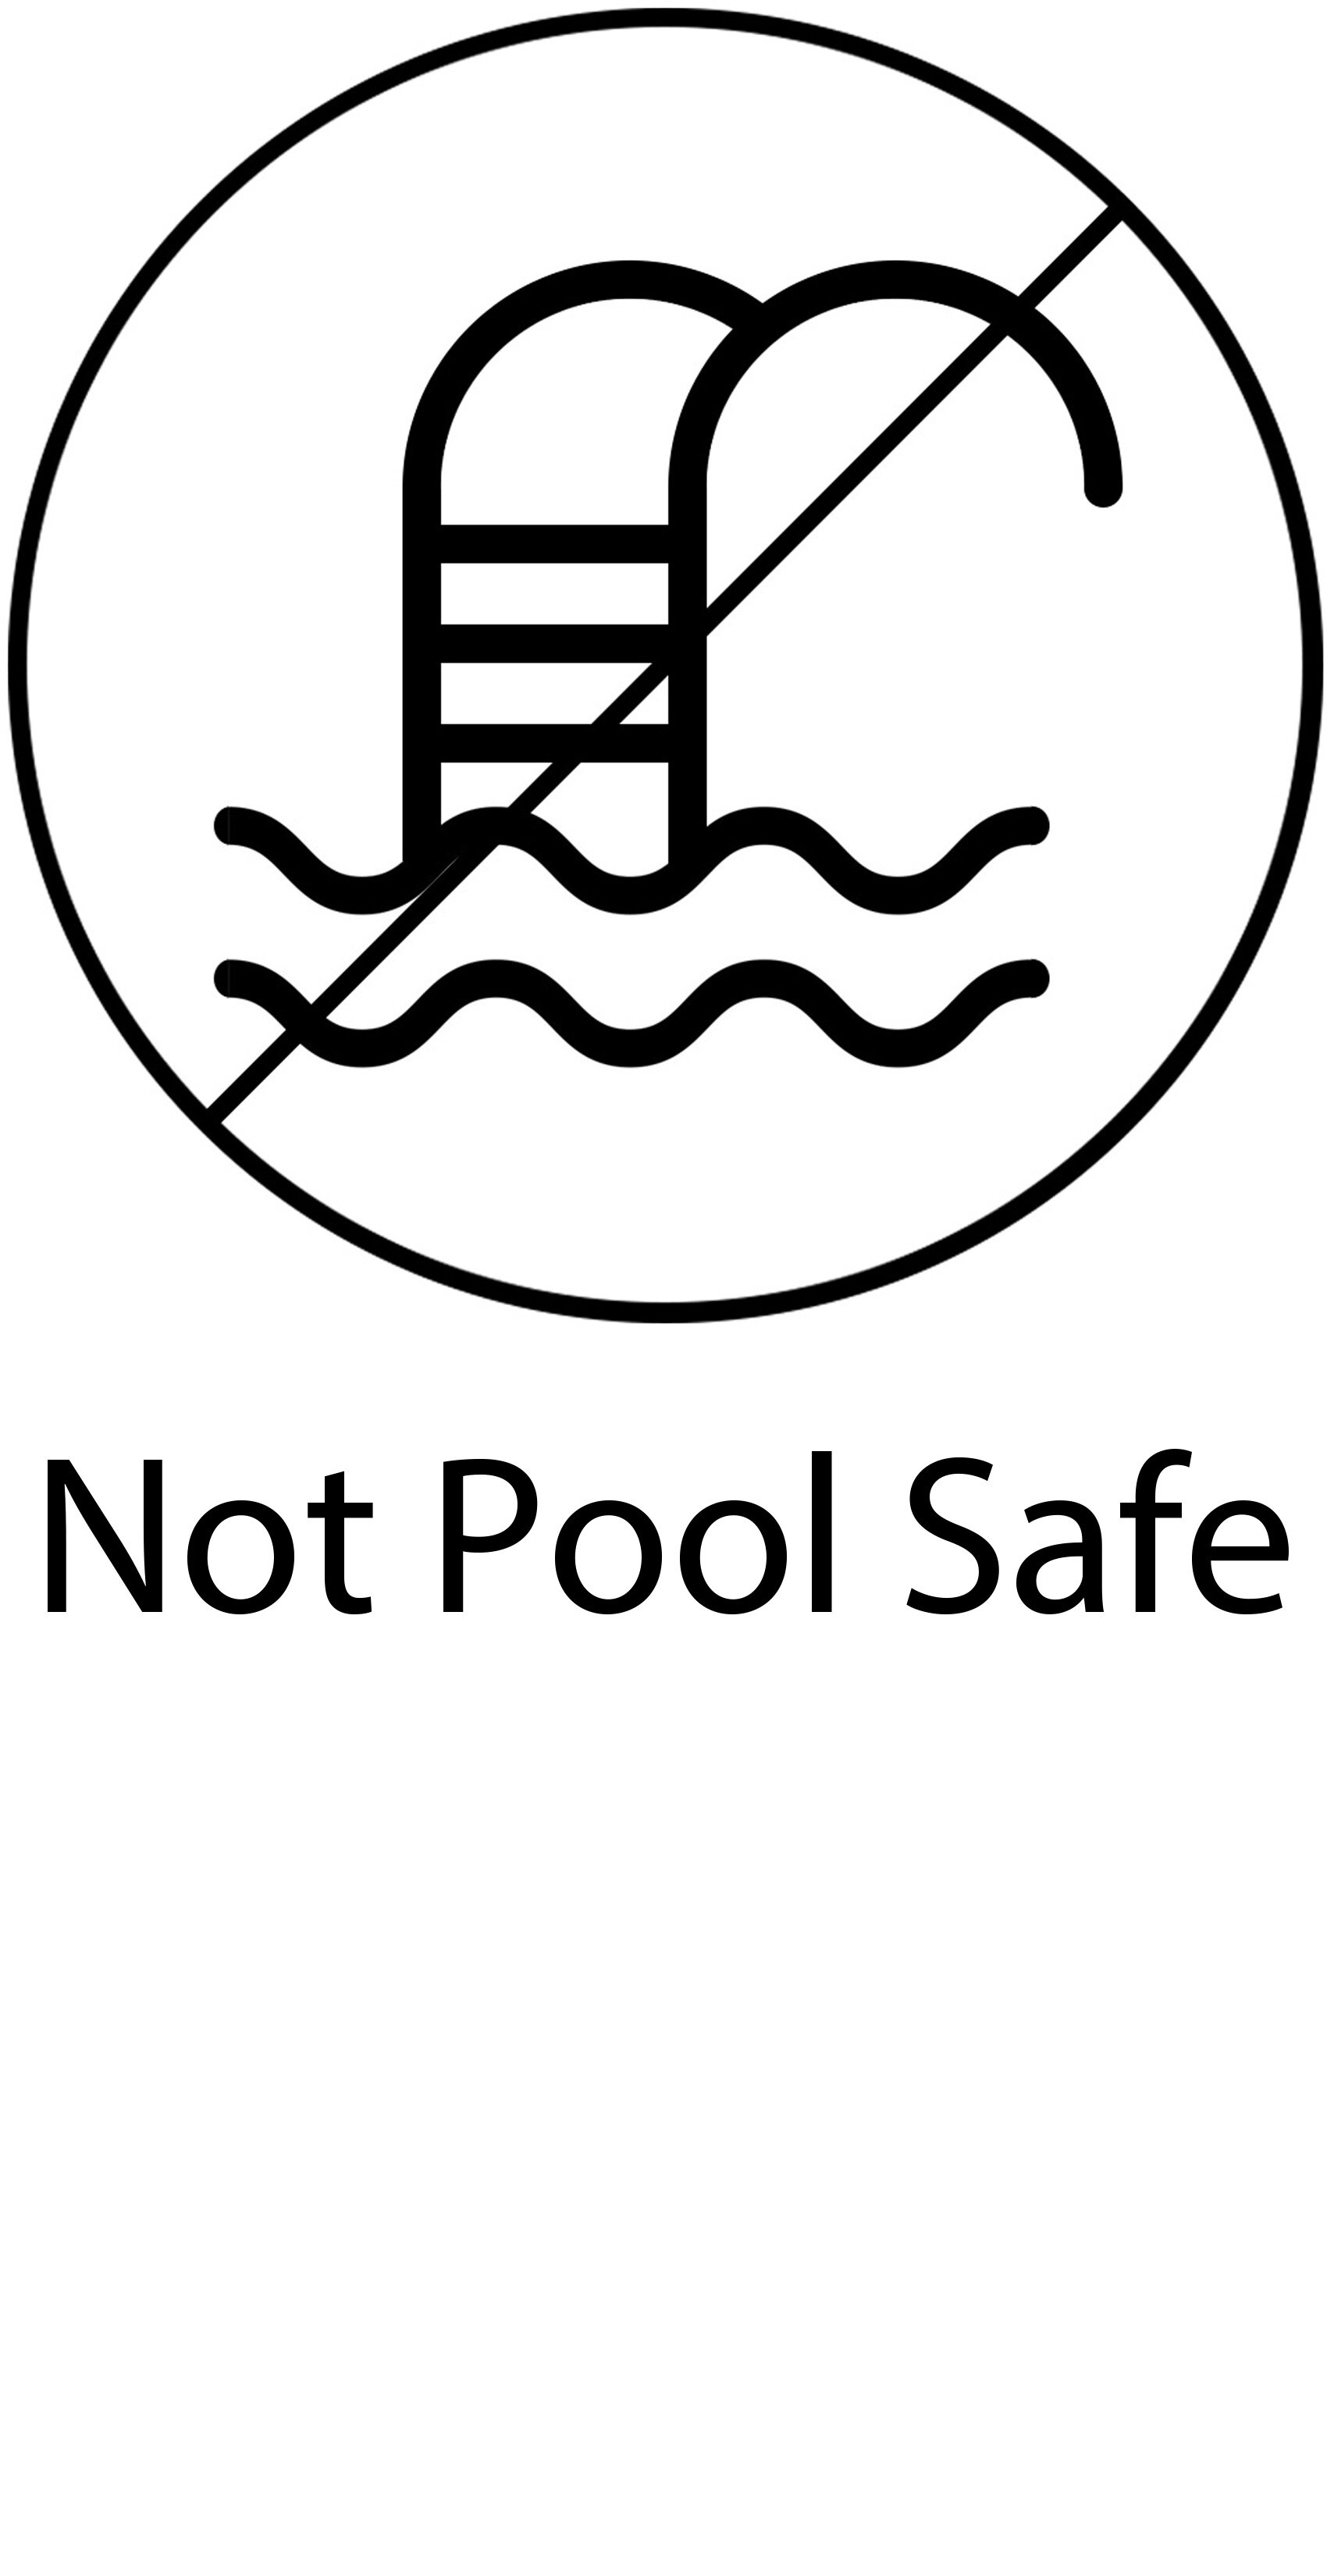 05 A_not pool safe.jpg